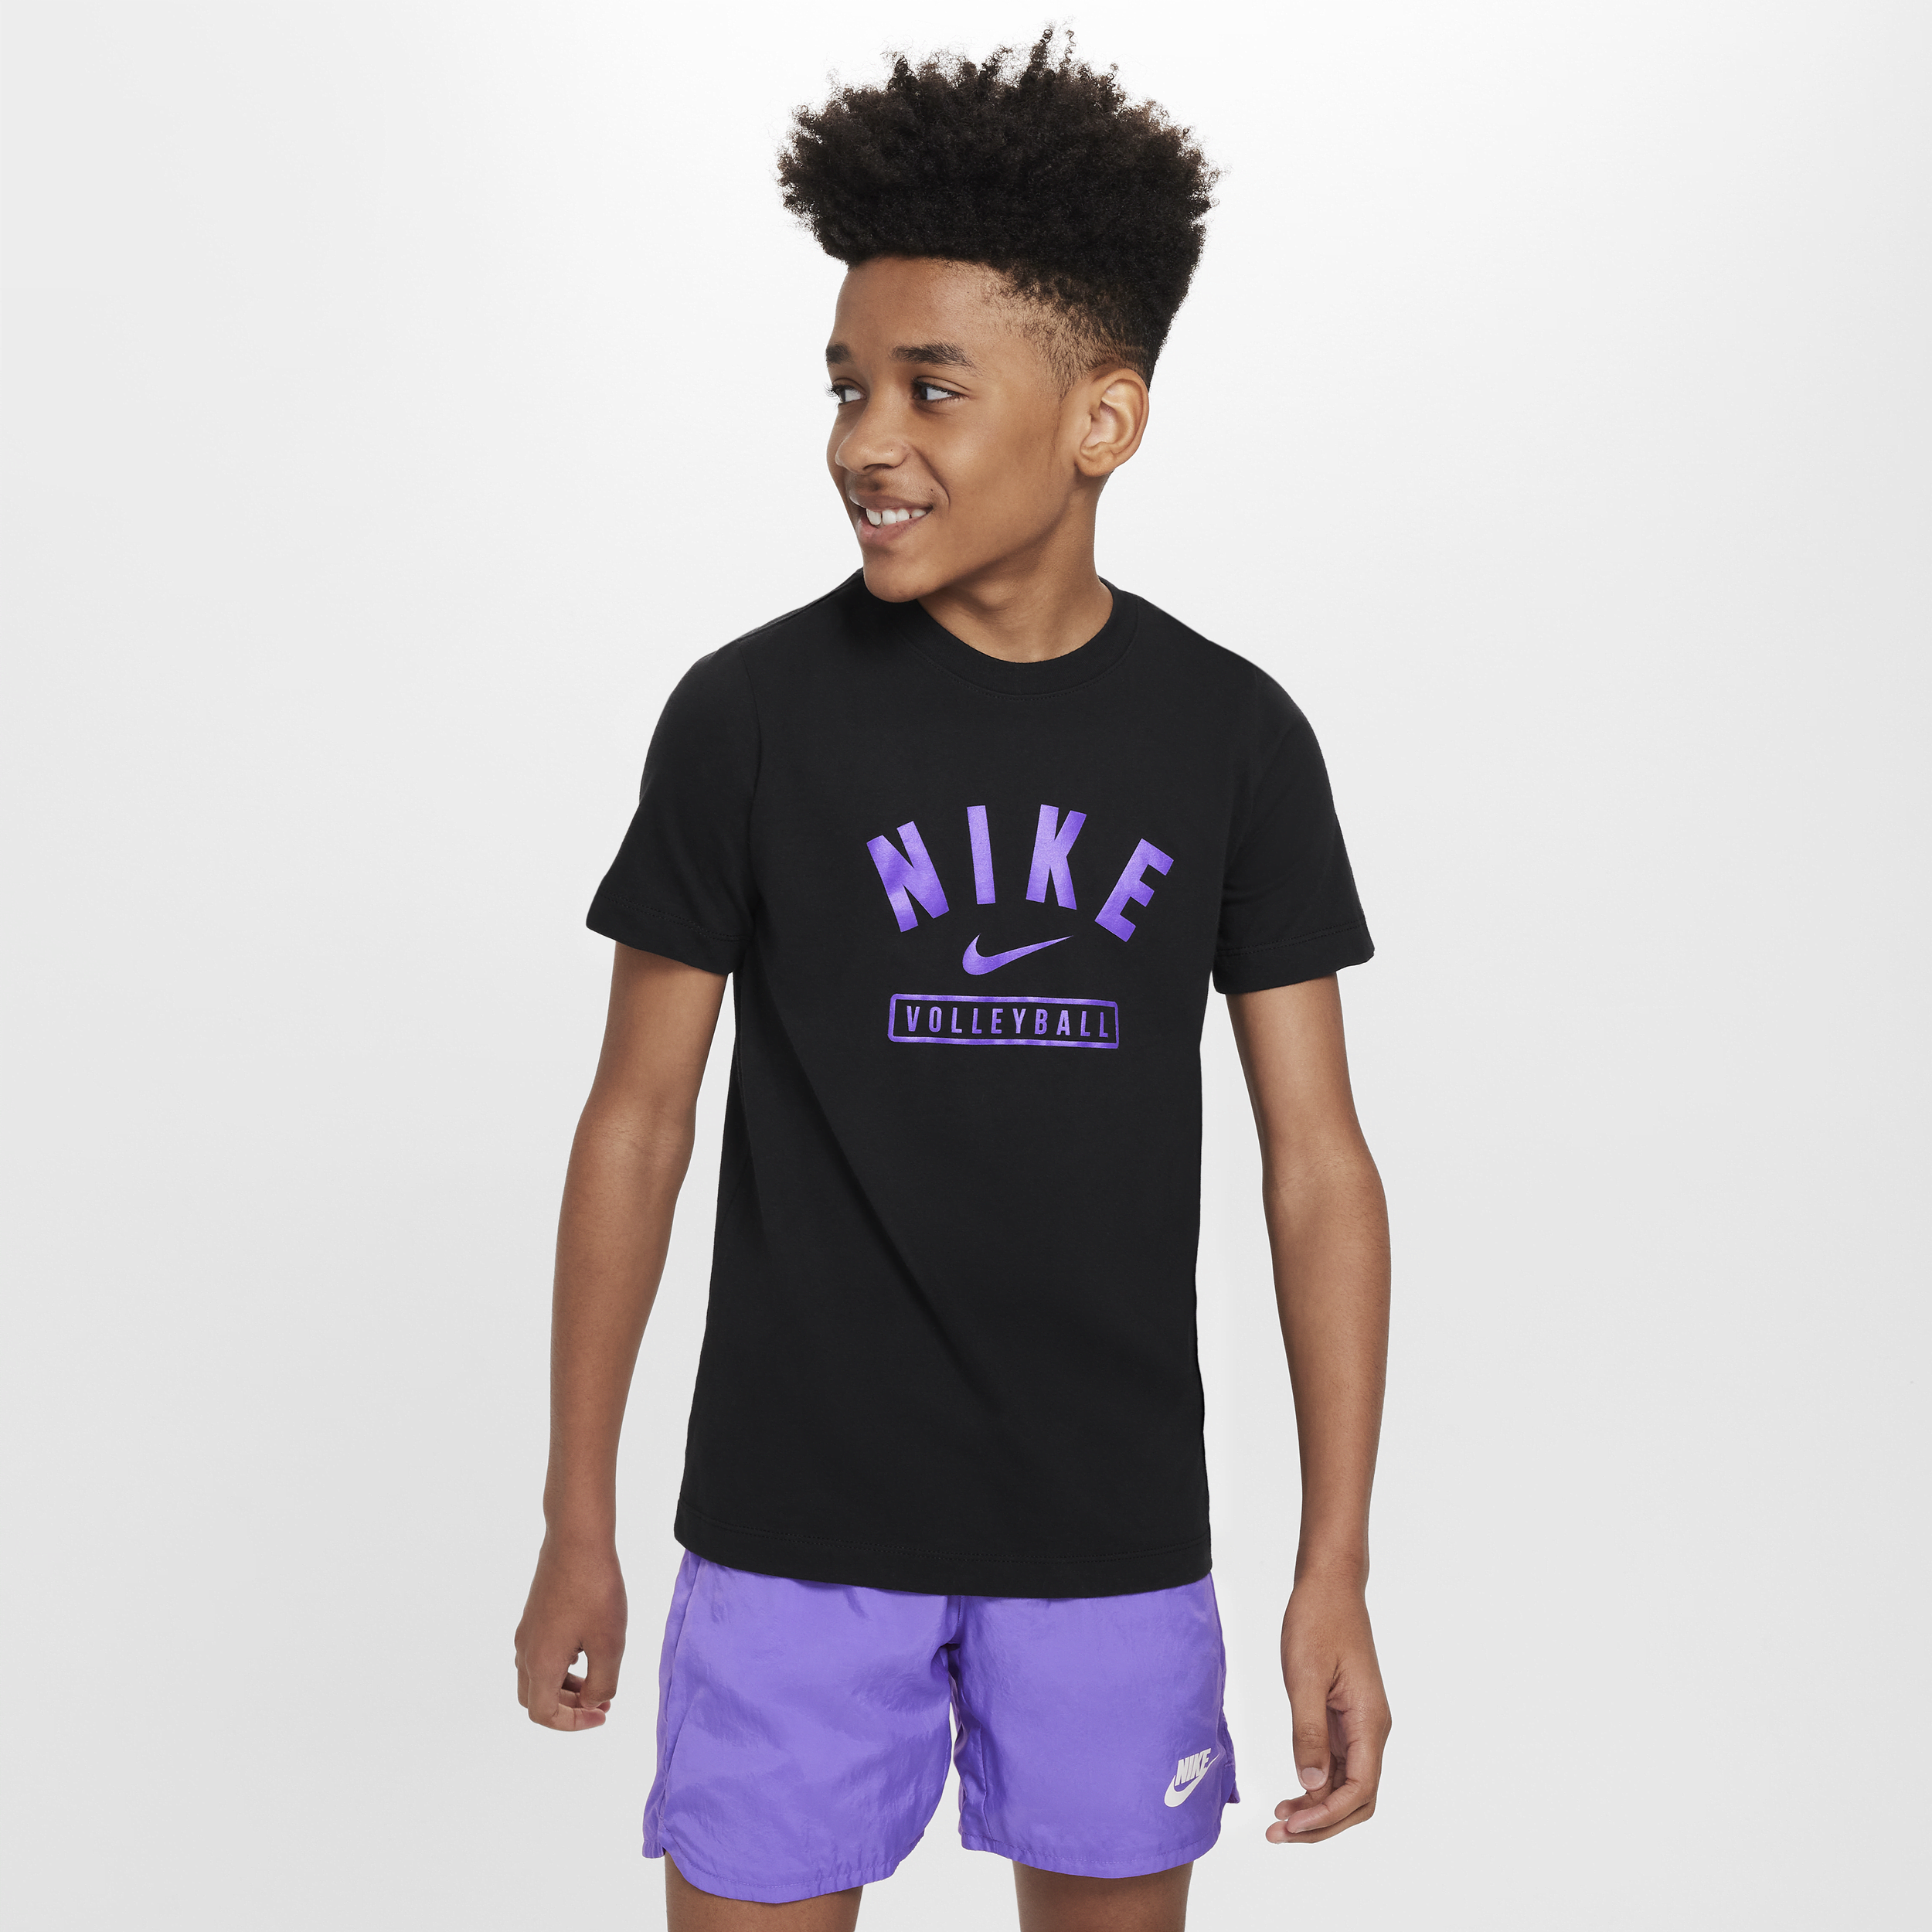 Nike Big Kids' Volleyball T-shirt In Black